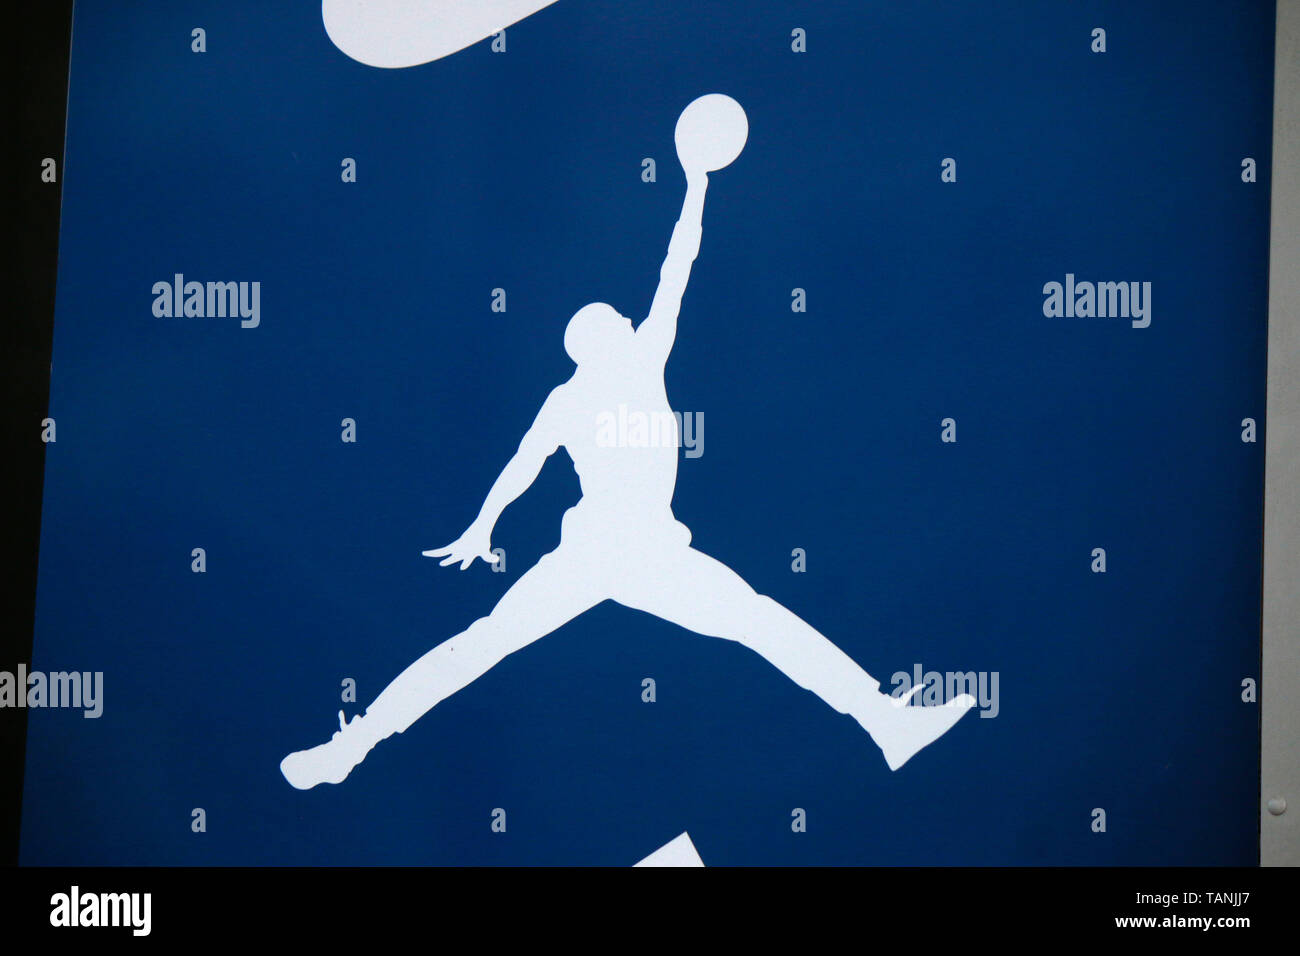 das Logo der Marke/ the logo of the brand "NBA National Basketball  Association Stock Photo - Alamy